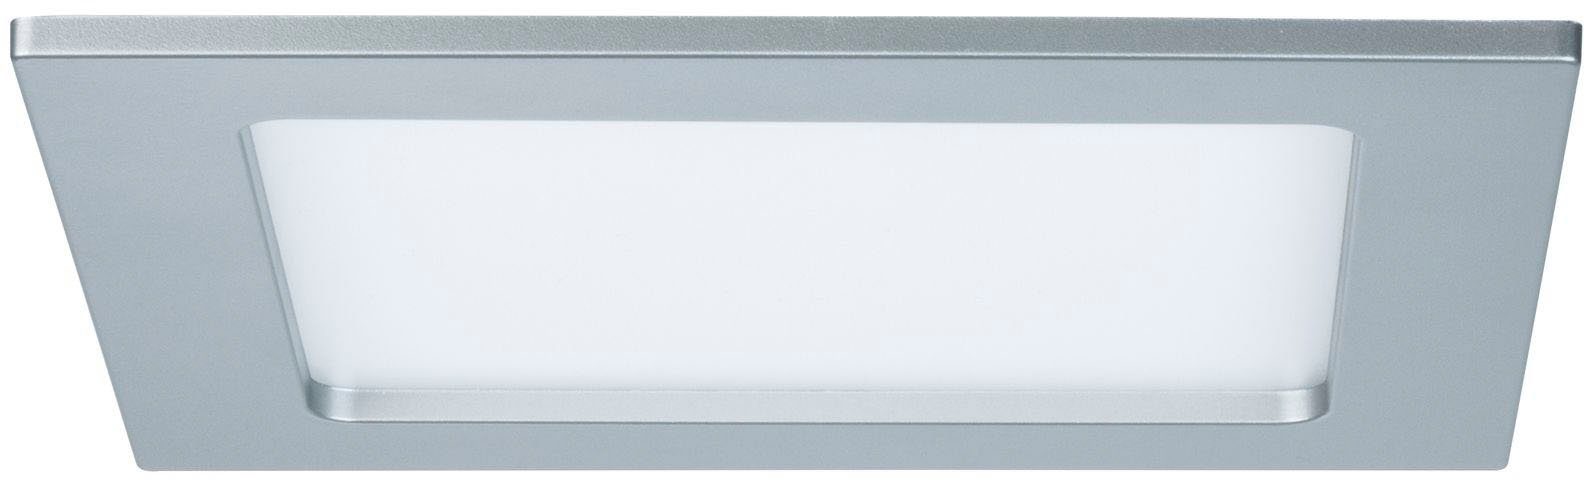 Badezimmer Decke LED Panels online kaufen | OTTO | Panels